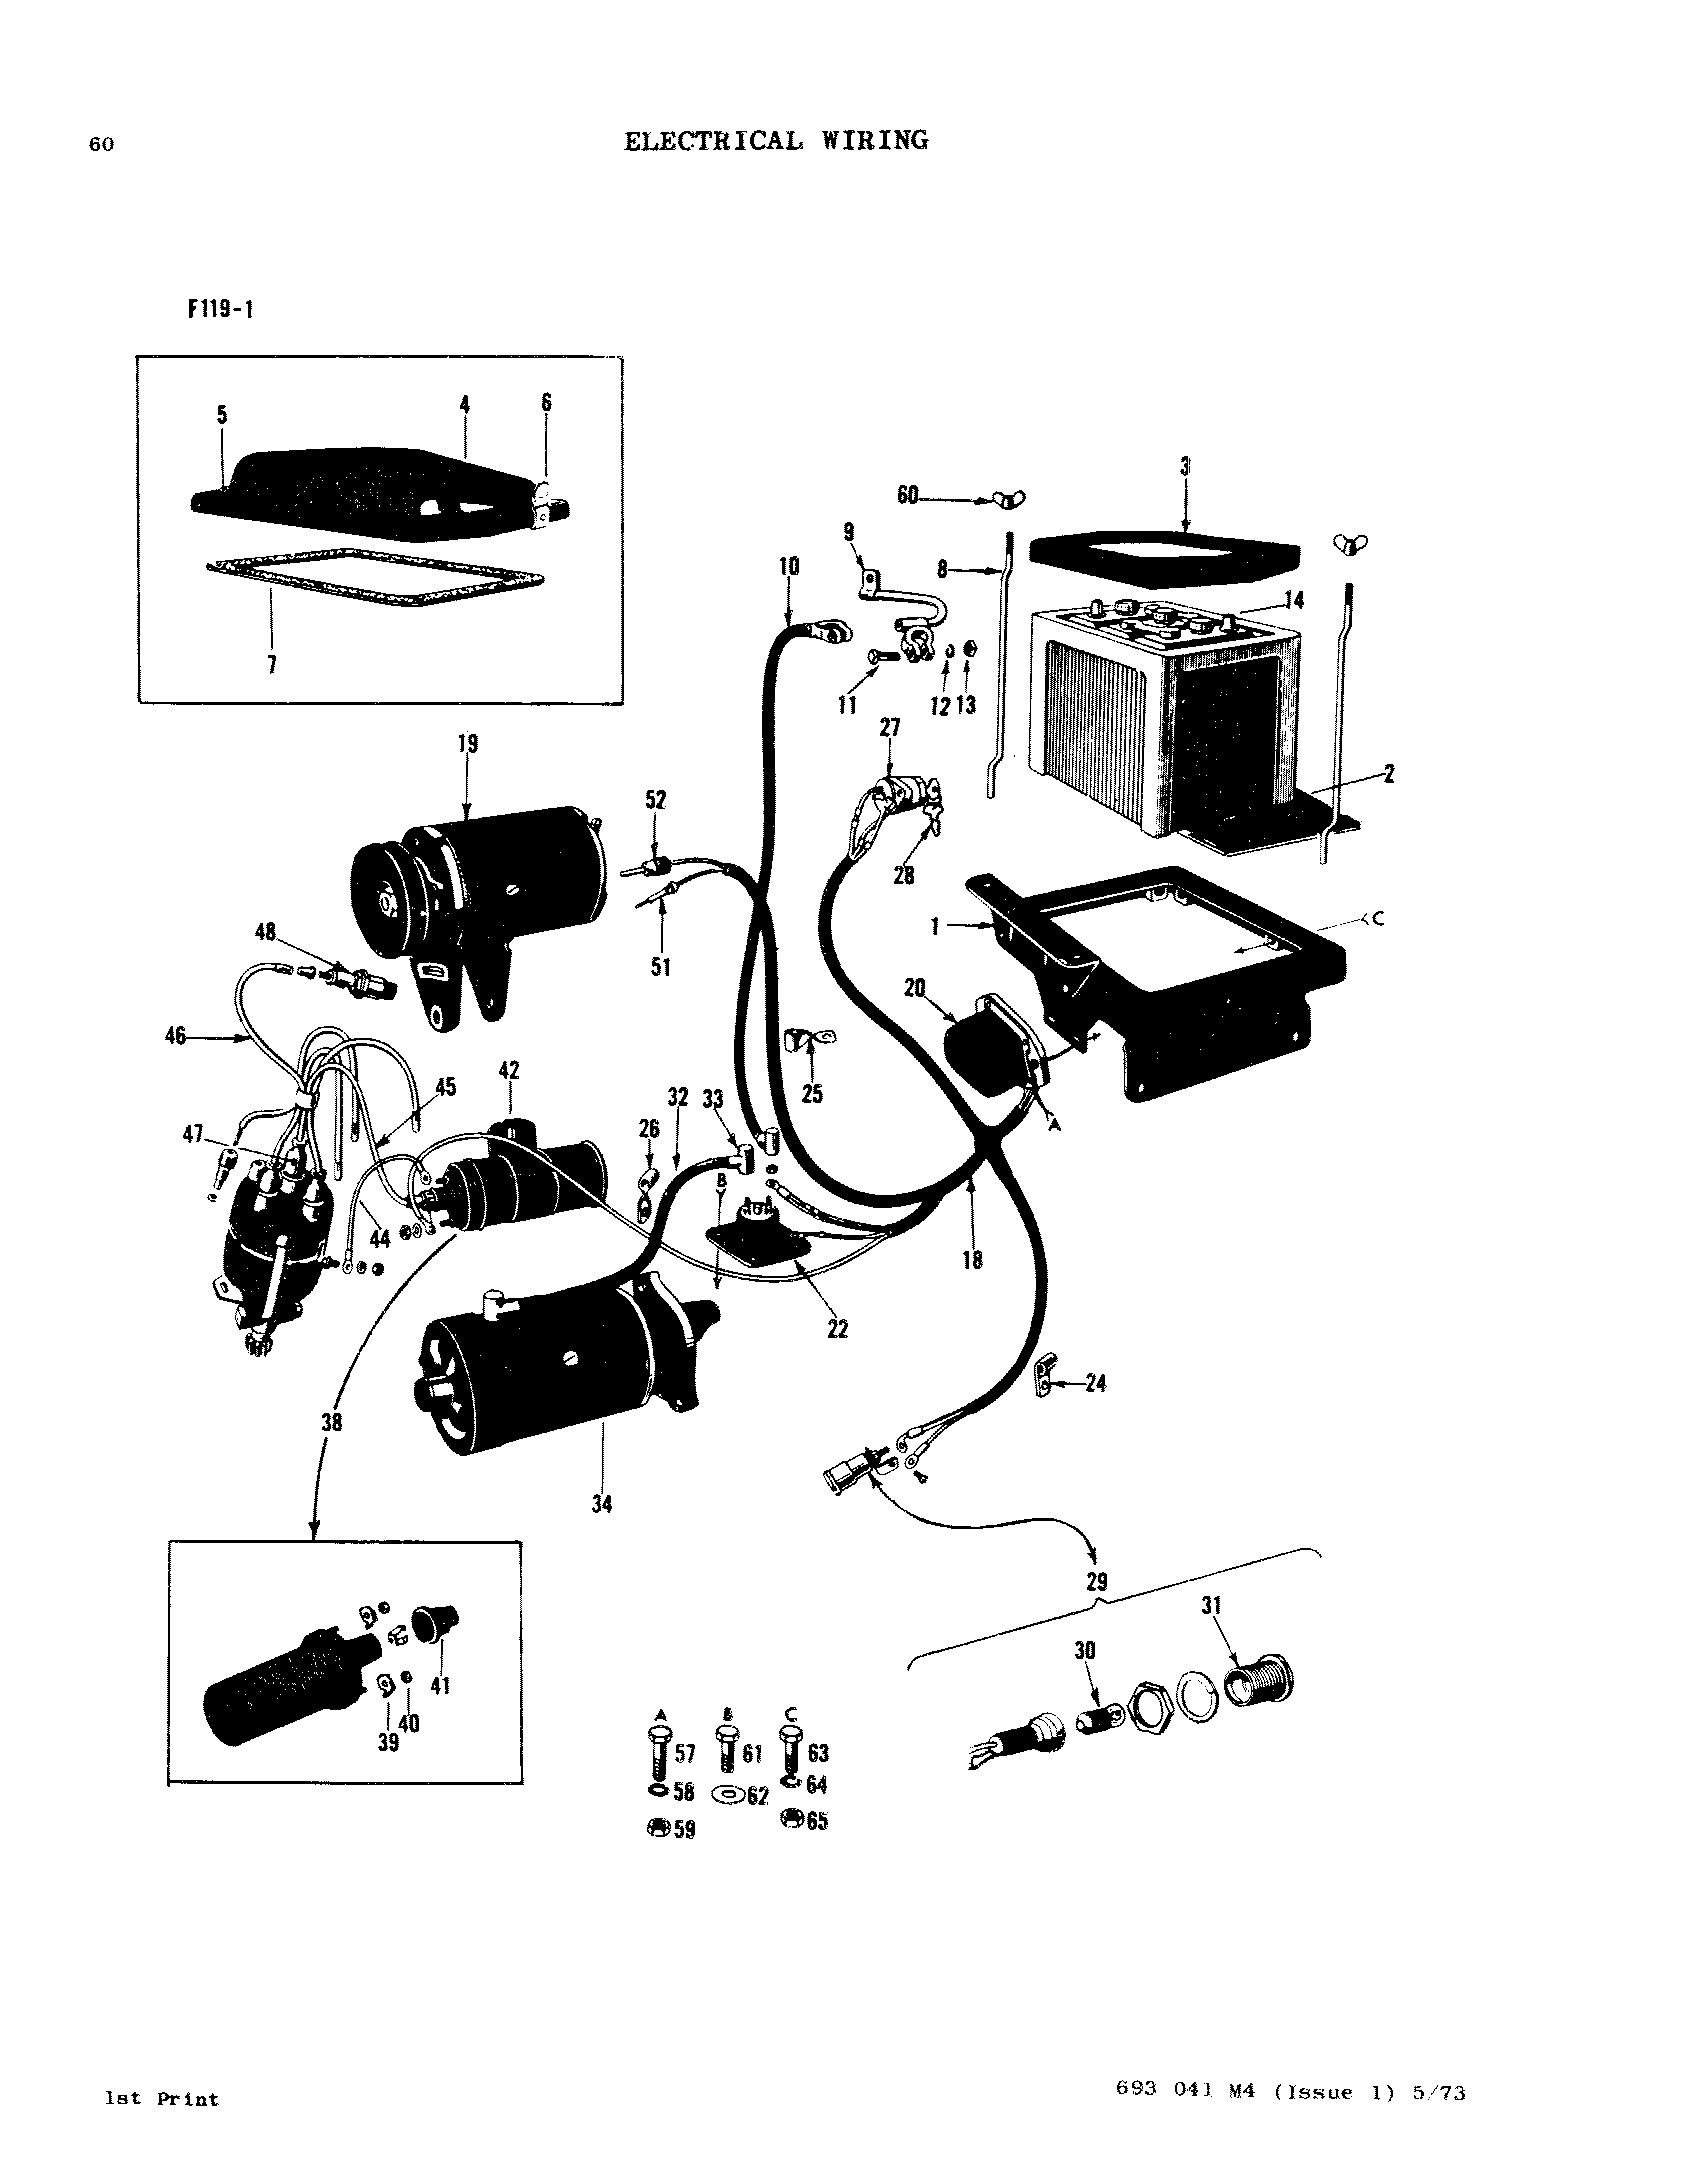 tef20 wiring diagram